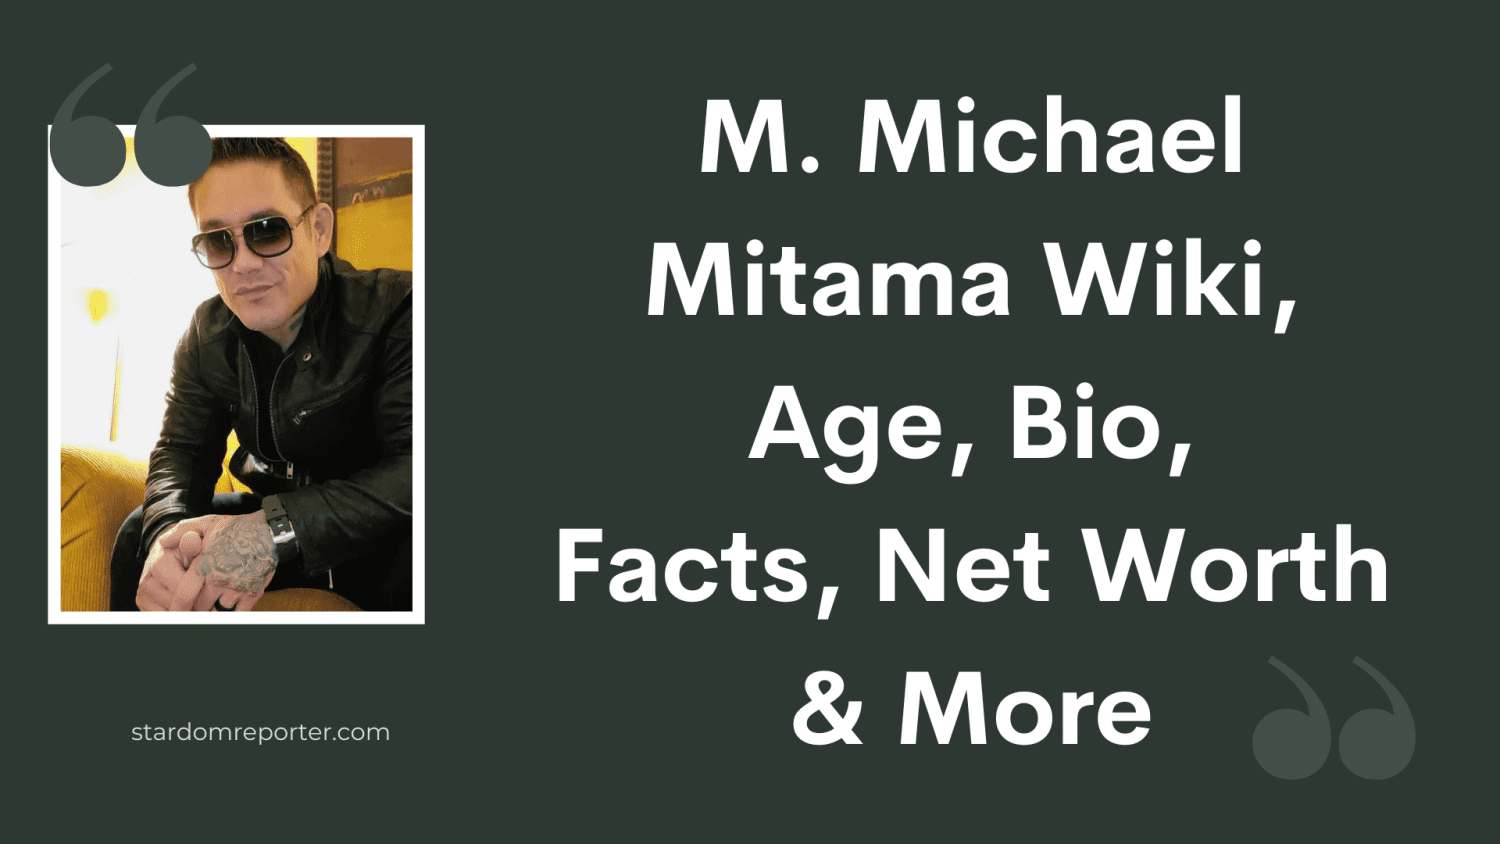 M. Michael Mitama Wiki, Age, Bio, Facts, Net Worth & More - 19